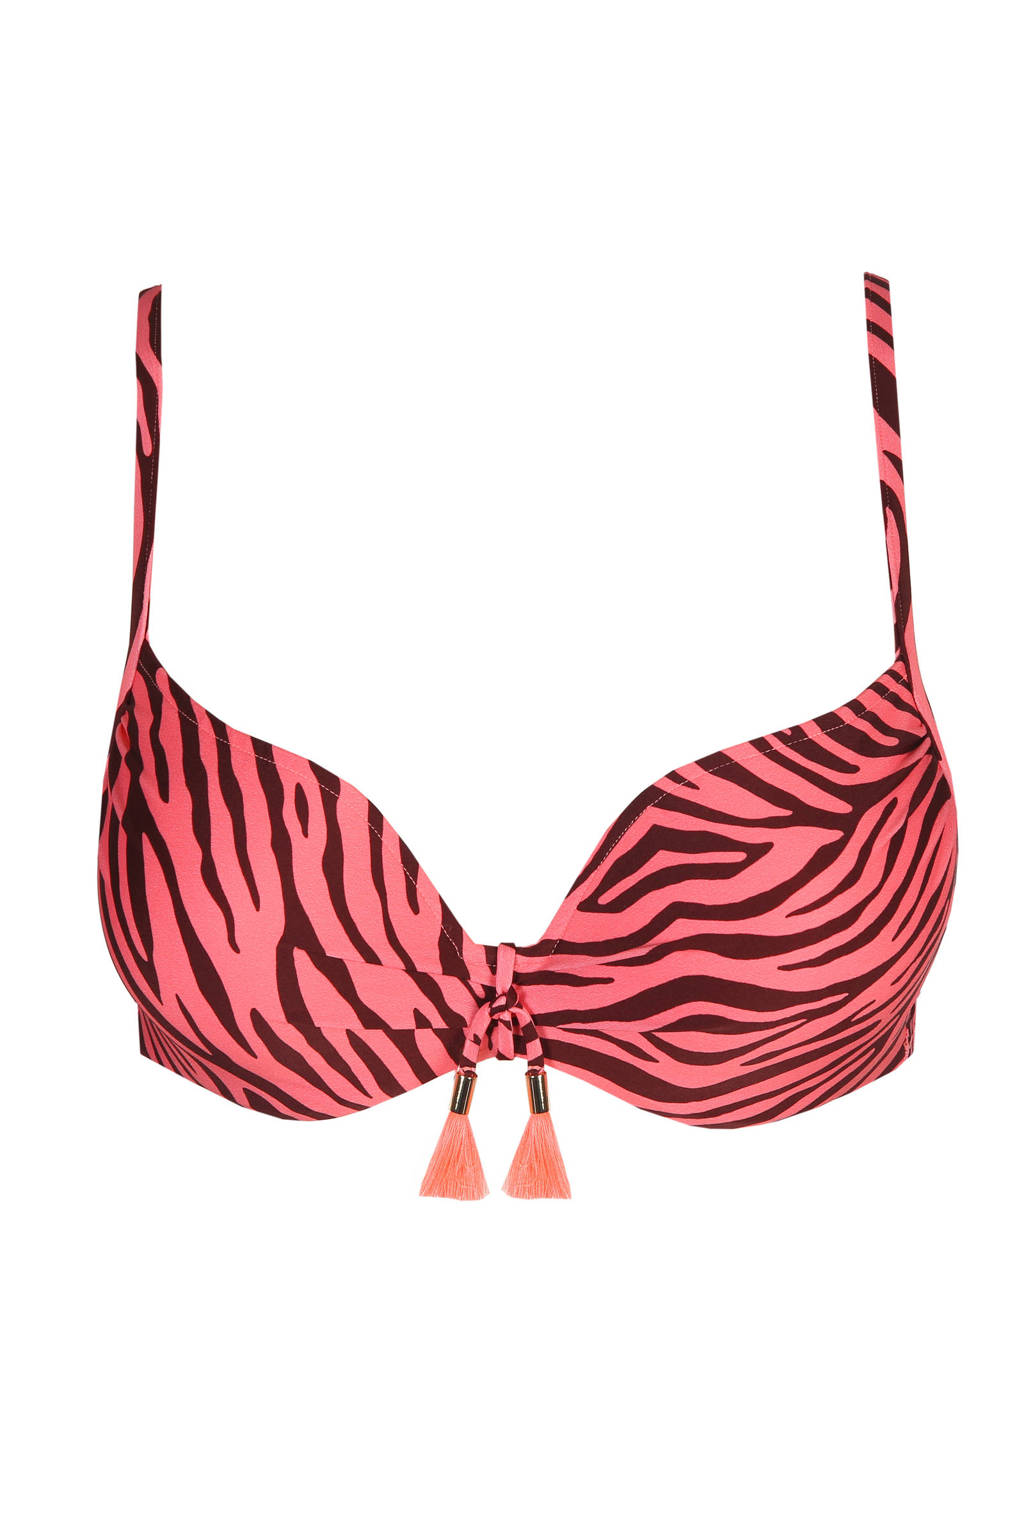 Marie Jo beugel bikinitop Zaragoza met zebraprint roze/donkerrood